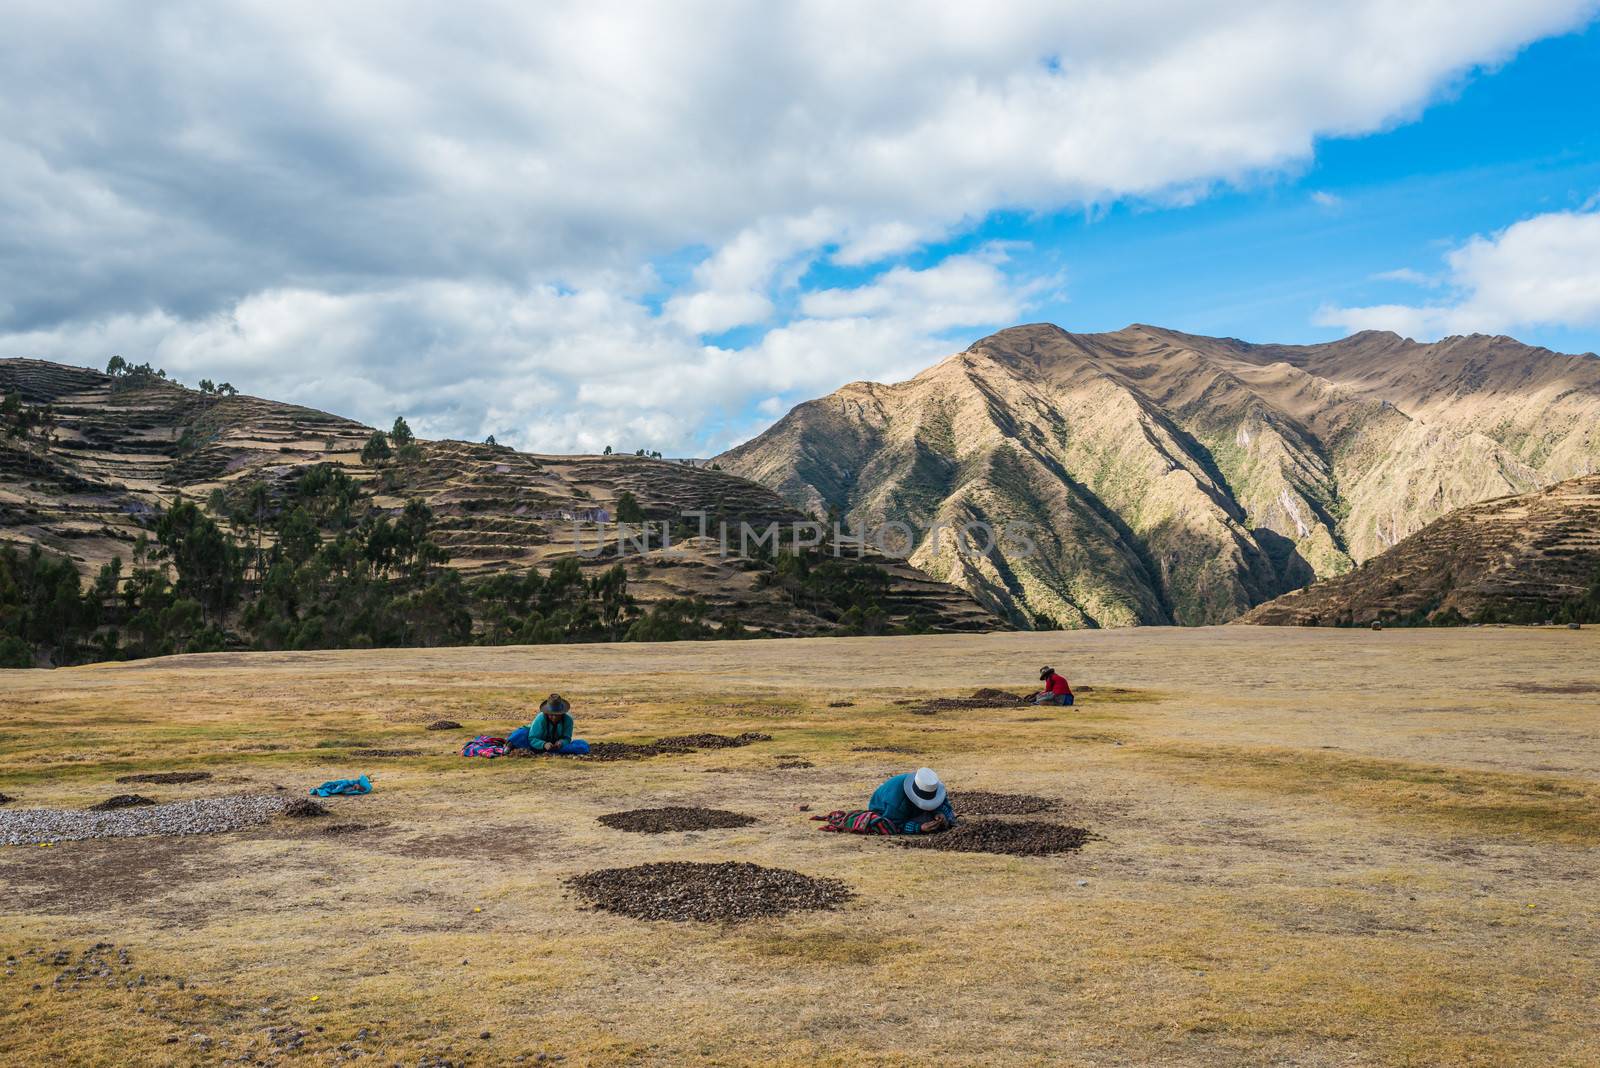 Chincheros, Peru - July 23, 2013: women collecting moraya at Chincheros town in the peruvian Andes at Cuzco Peru on july 23, 2013